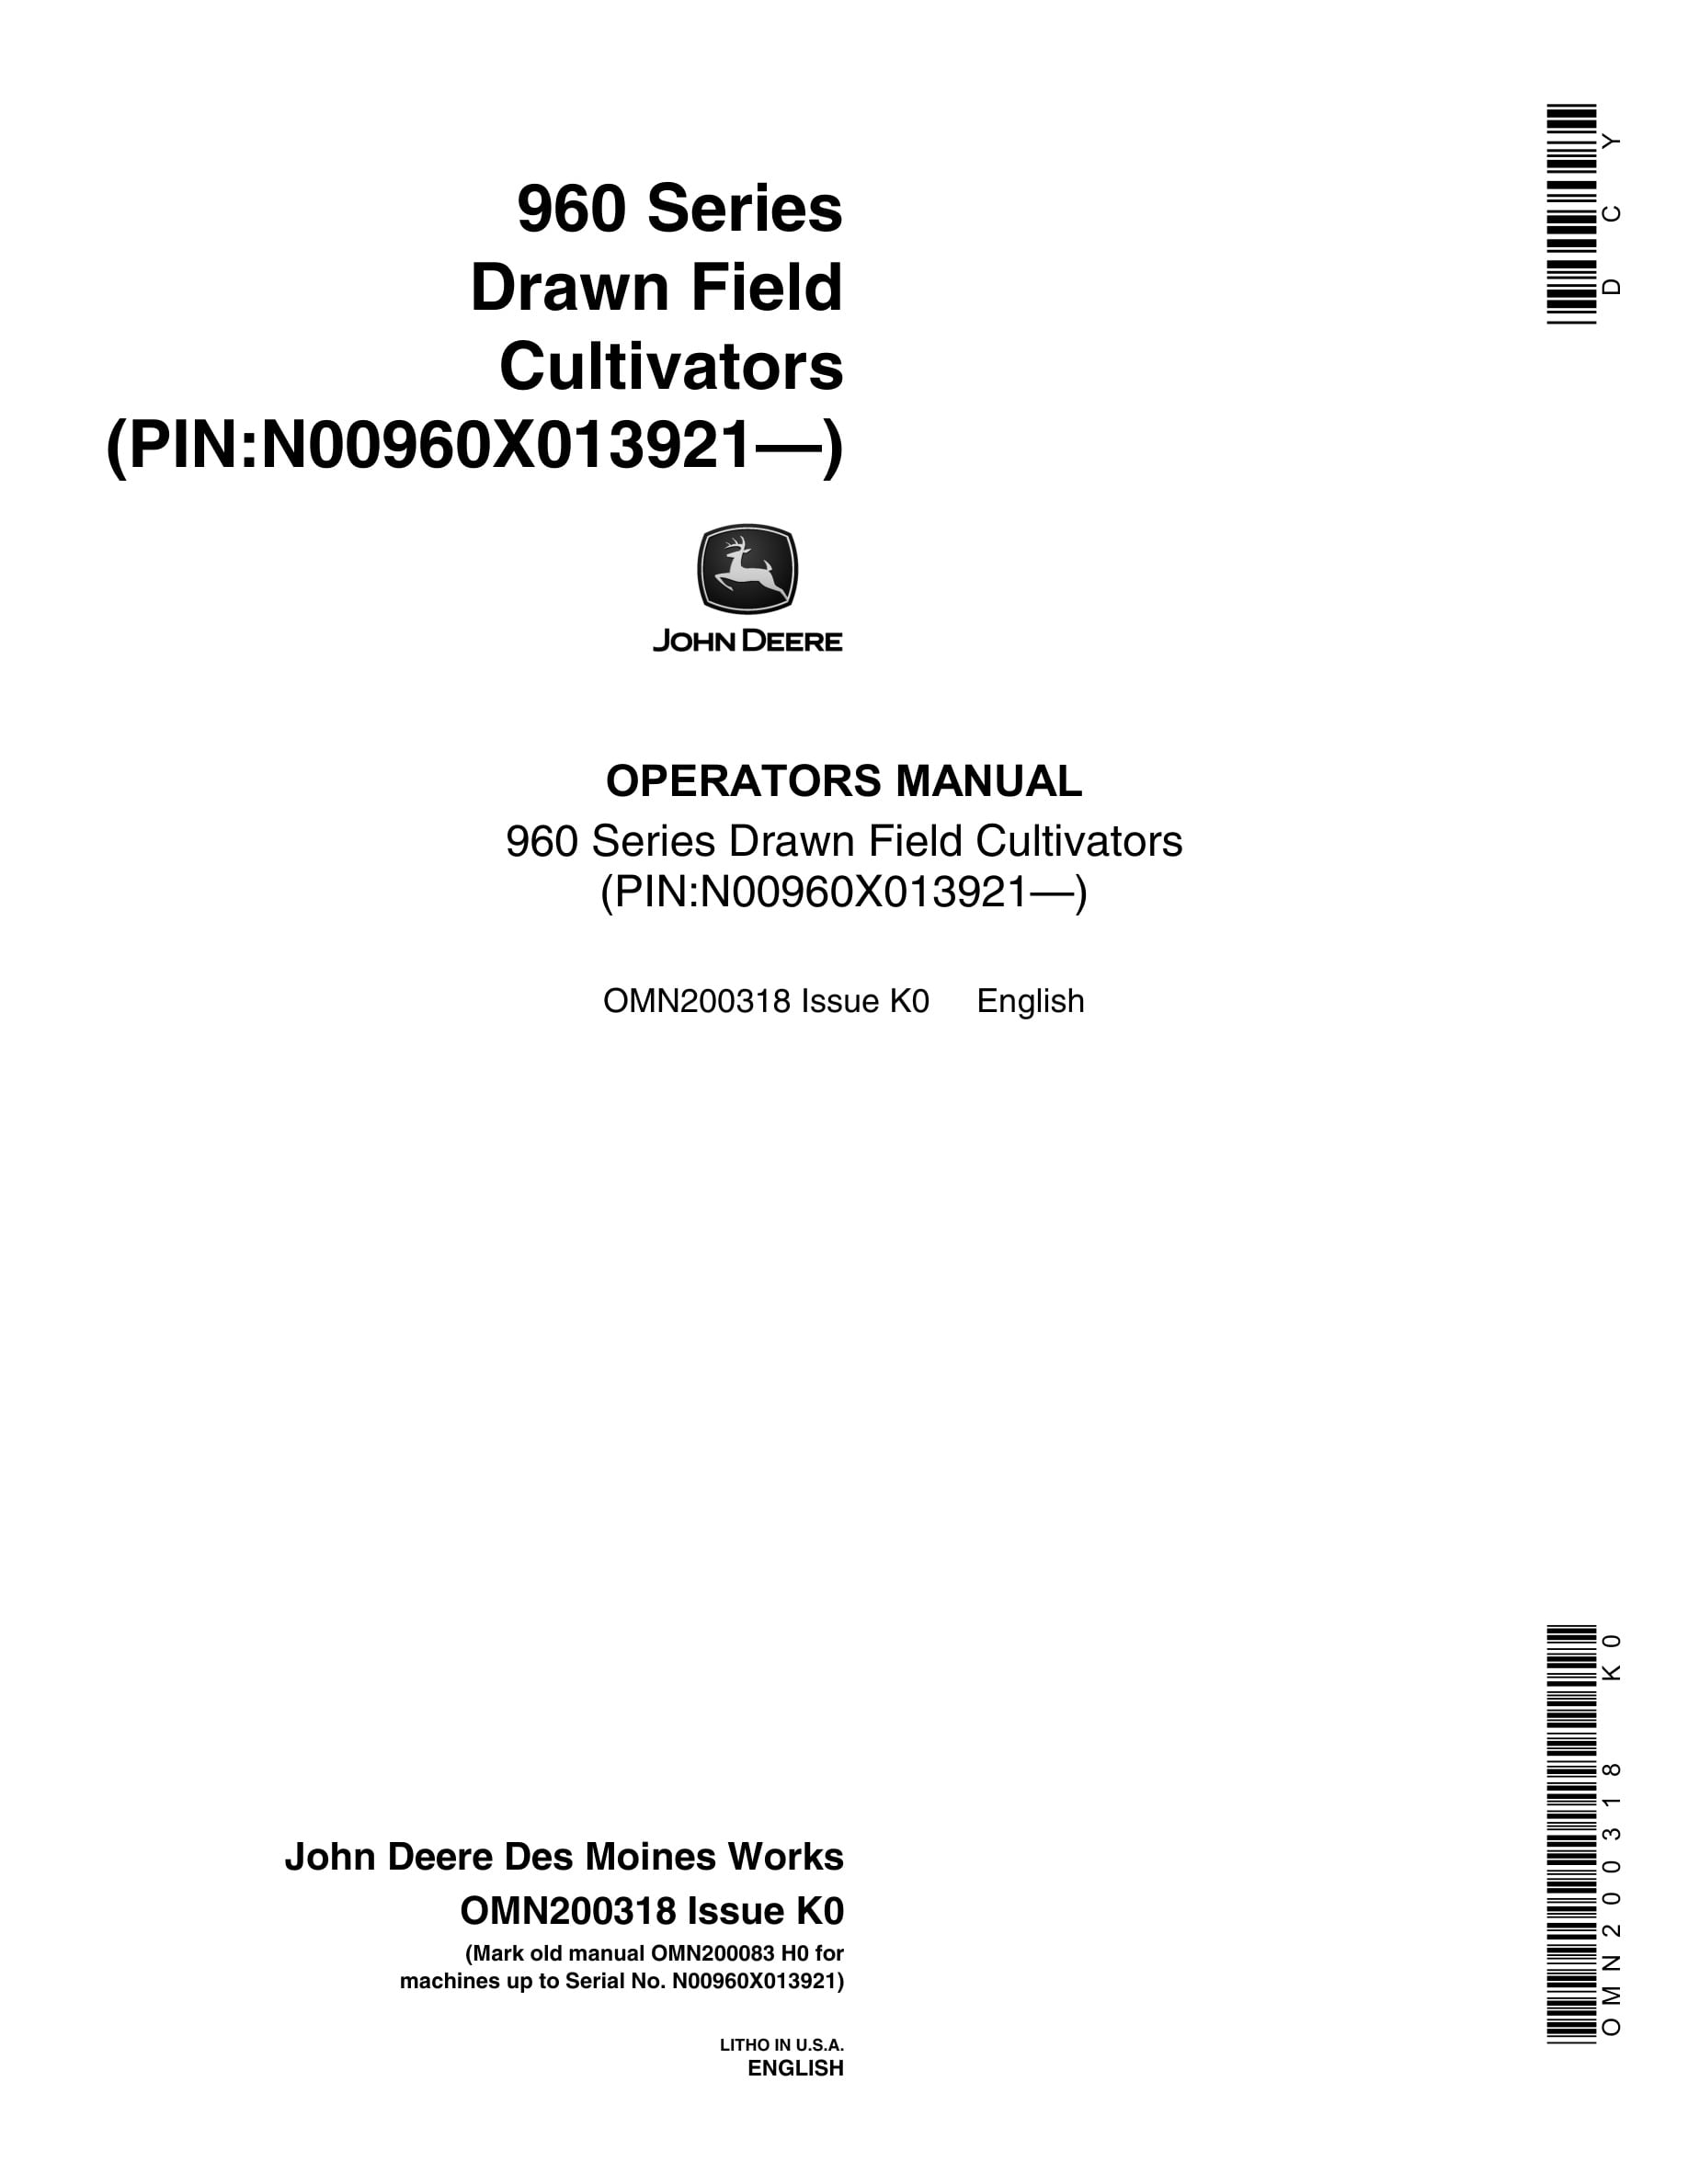 John Deere 960 Series Drawn Field CULTIVATOR Operator Manual OMN200318-1